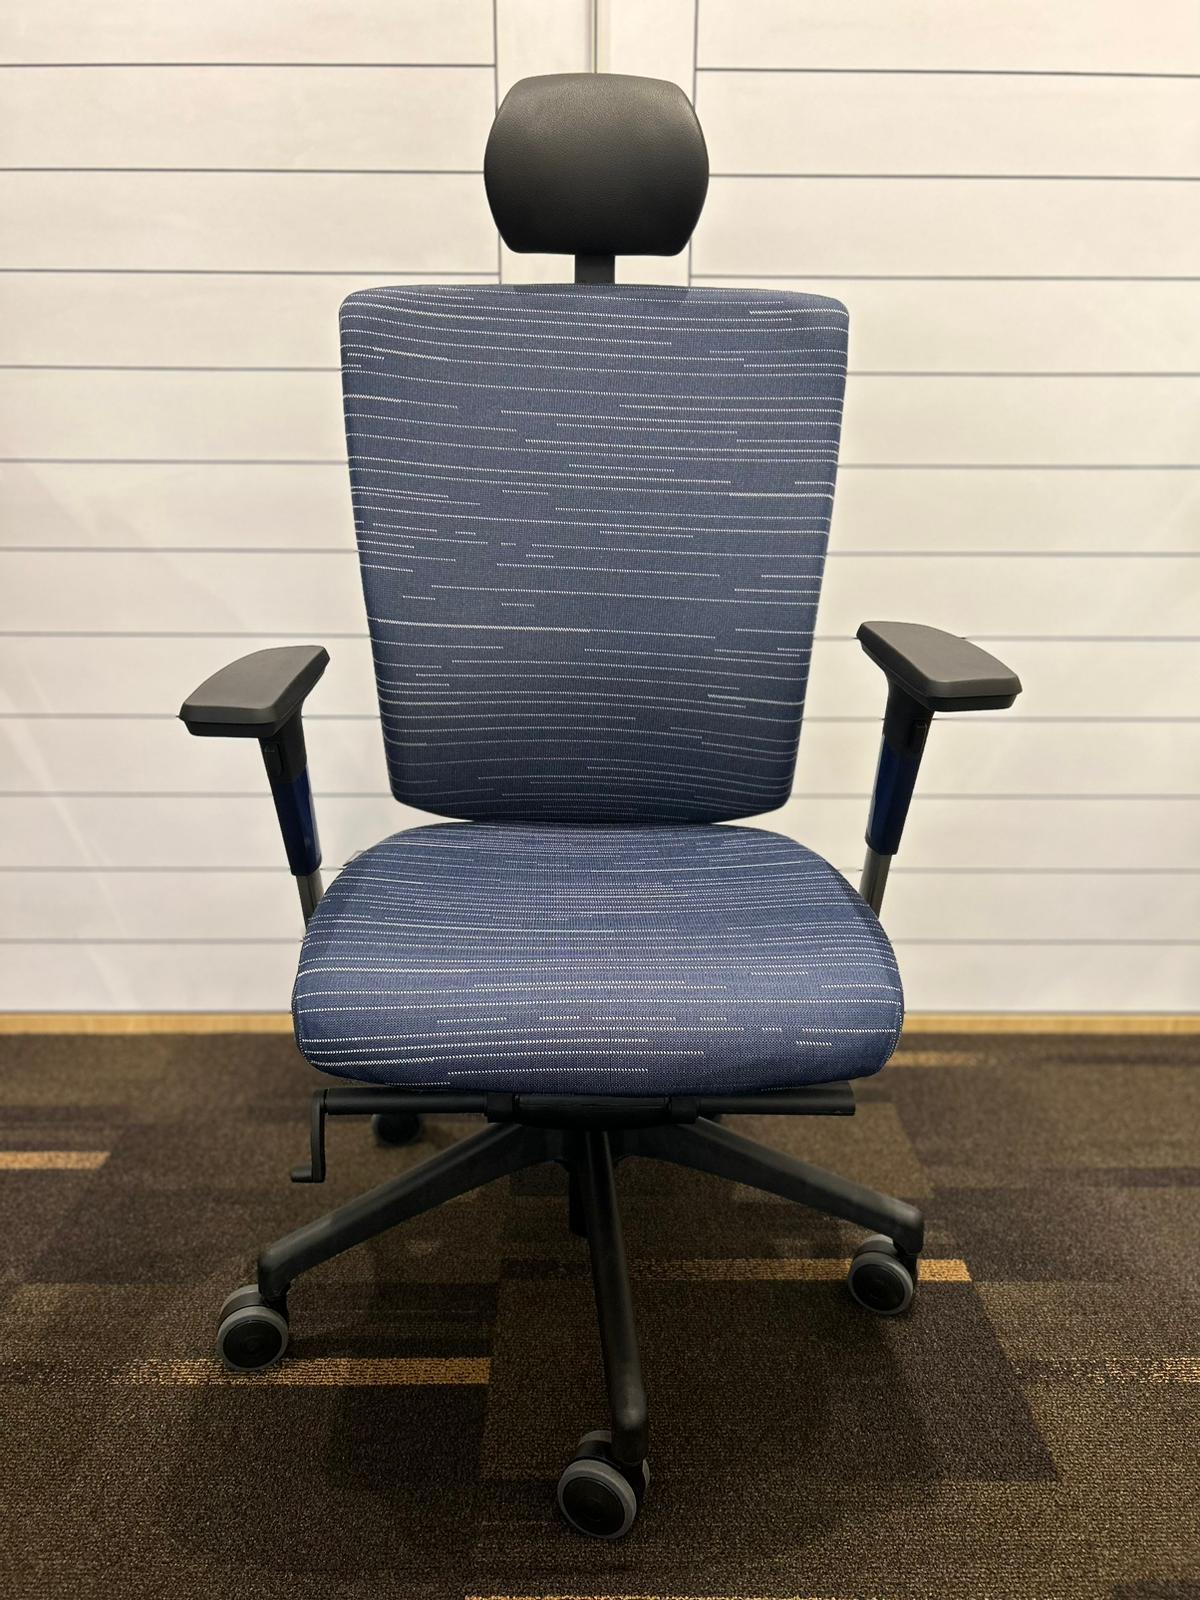 [DISPLAY UNIT] DUOFLEX - BR-200M_N_FL - Bravo Collection Ergonomic Chair